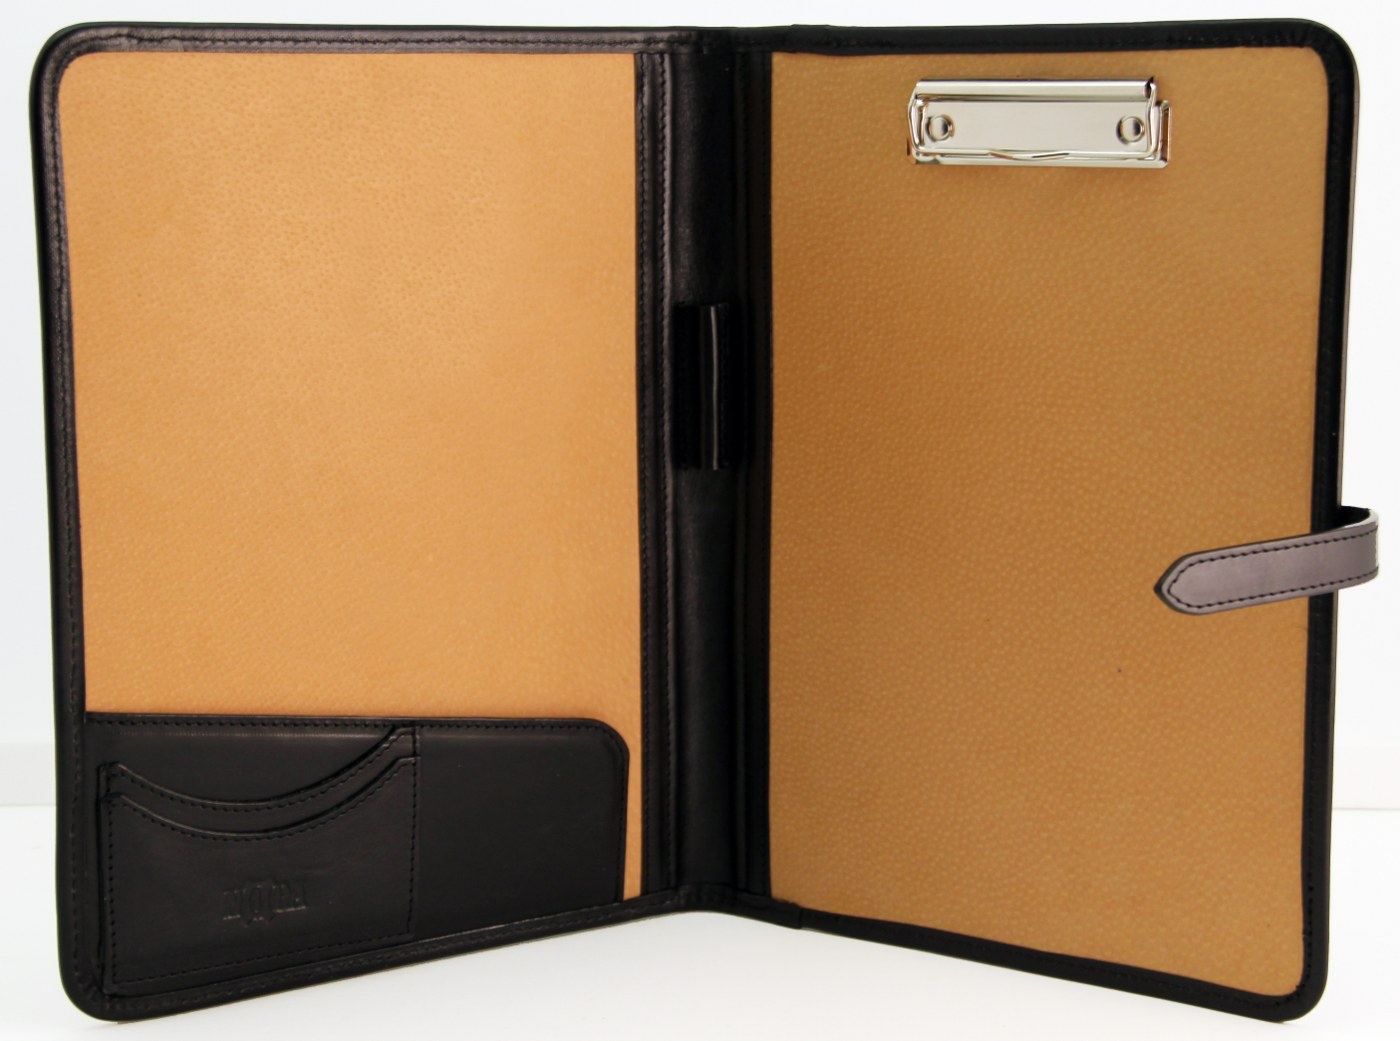 Conference Folder a4 Black Noda Genuine Leather clipboard Meeting Folio clipboard